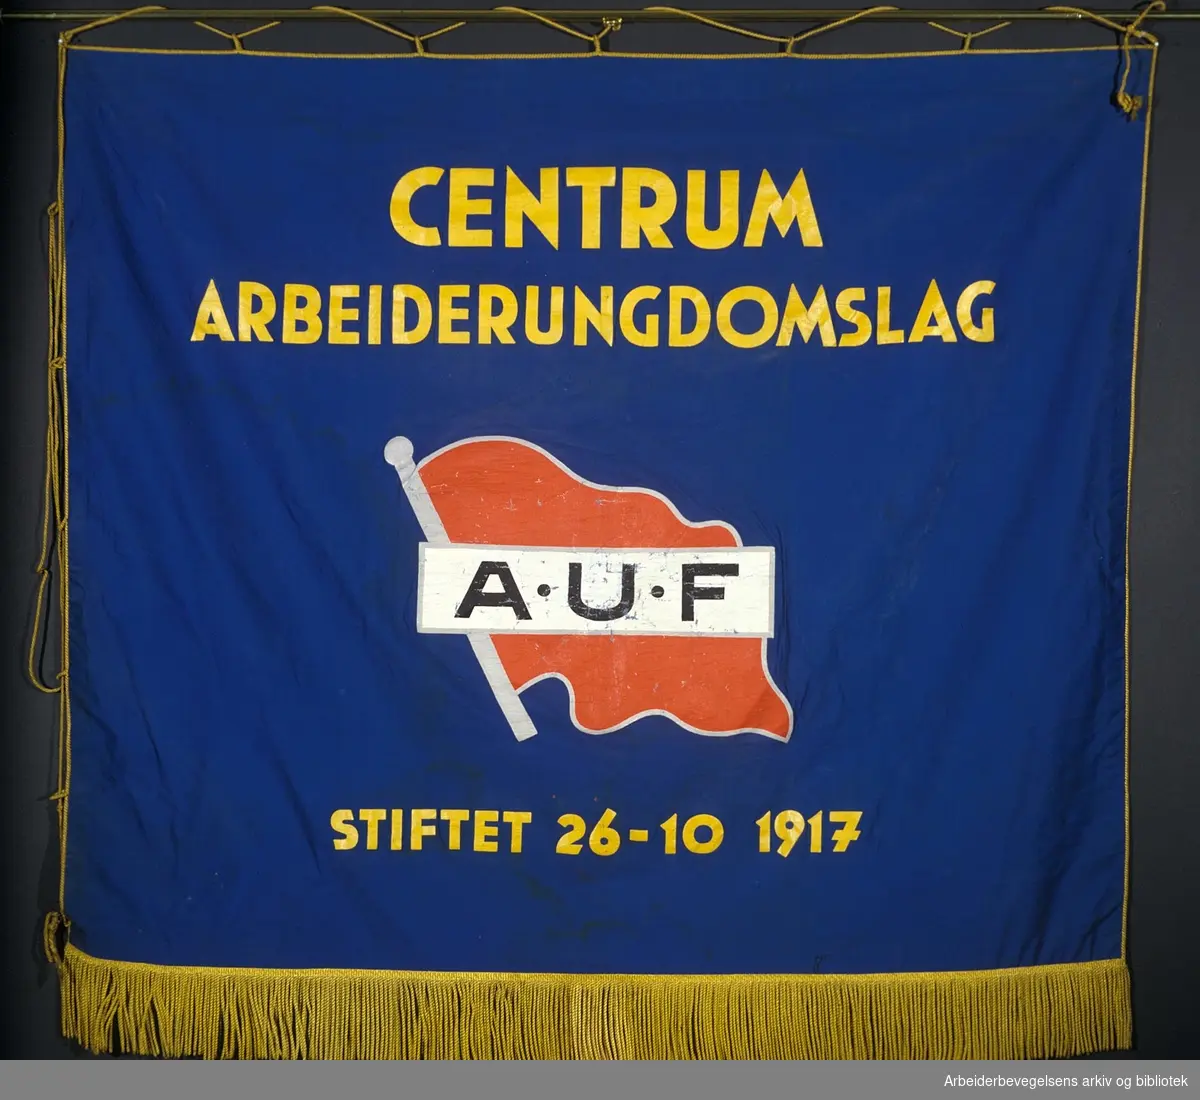 Centrum arbeiderungdomslag.Stiftet 26. oktober 1917..Forside..Fanetekst: Centrum Arbeiderungdomslag.Stiftet 26 - 10 1917